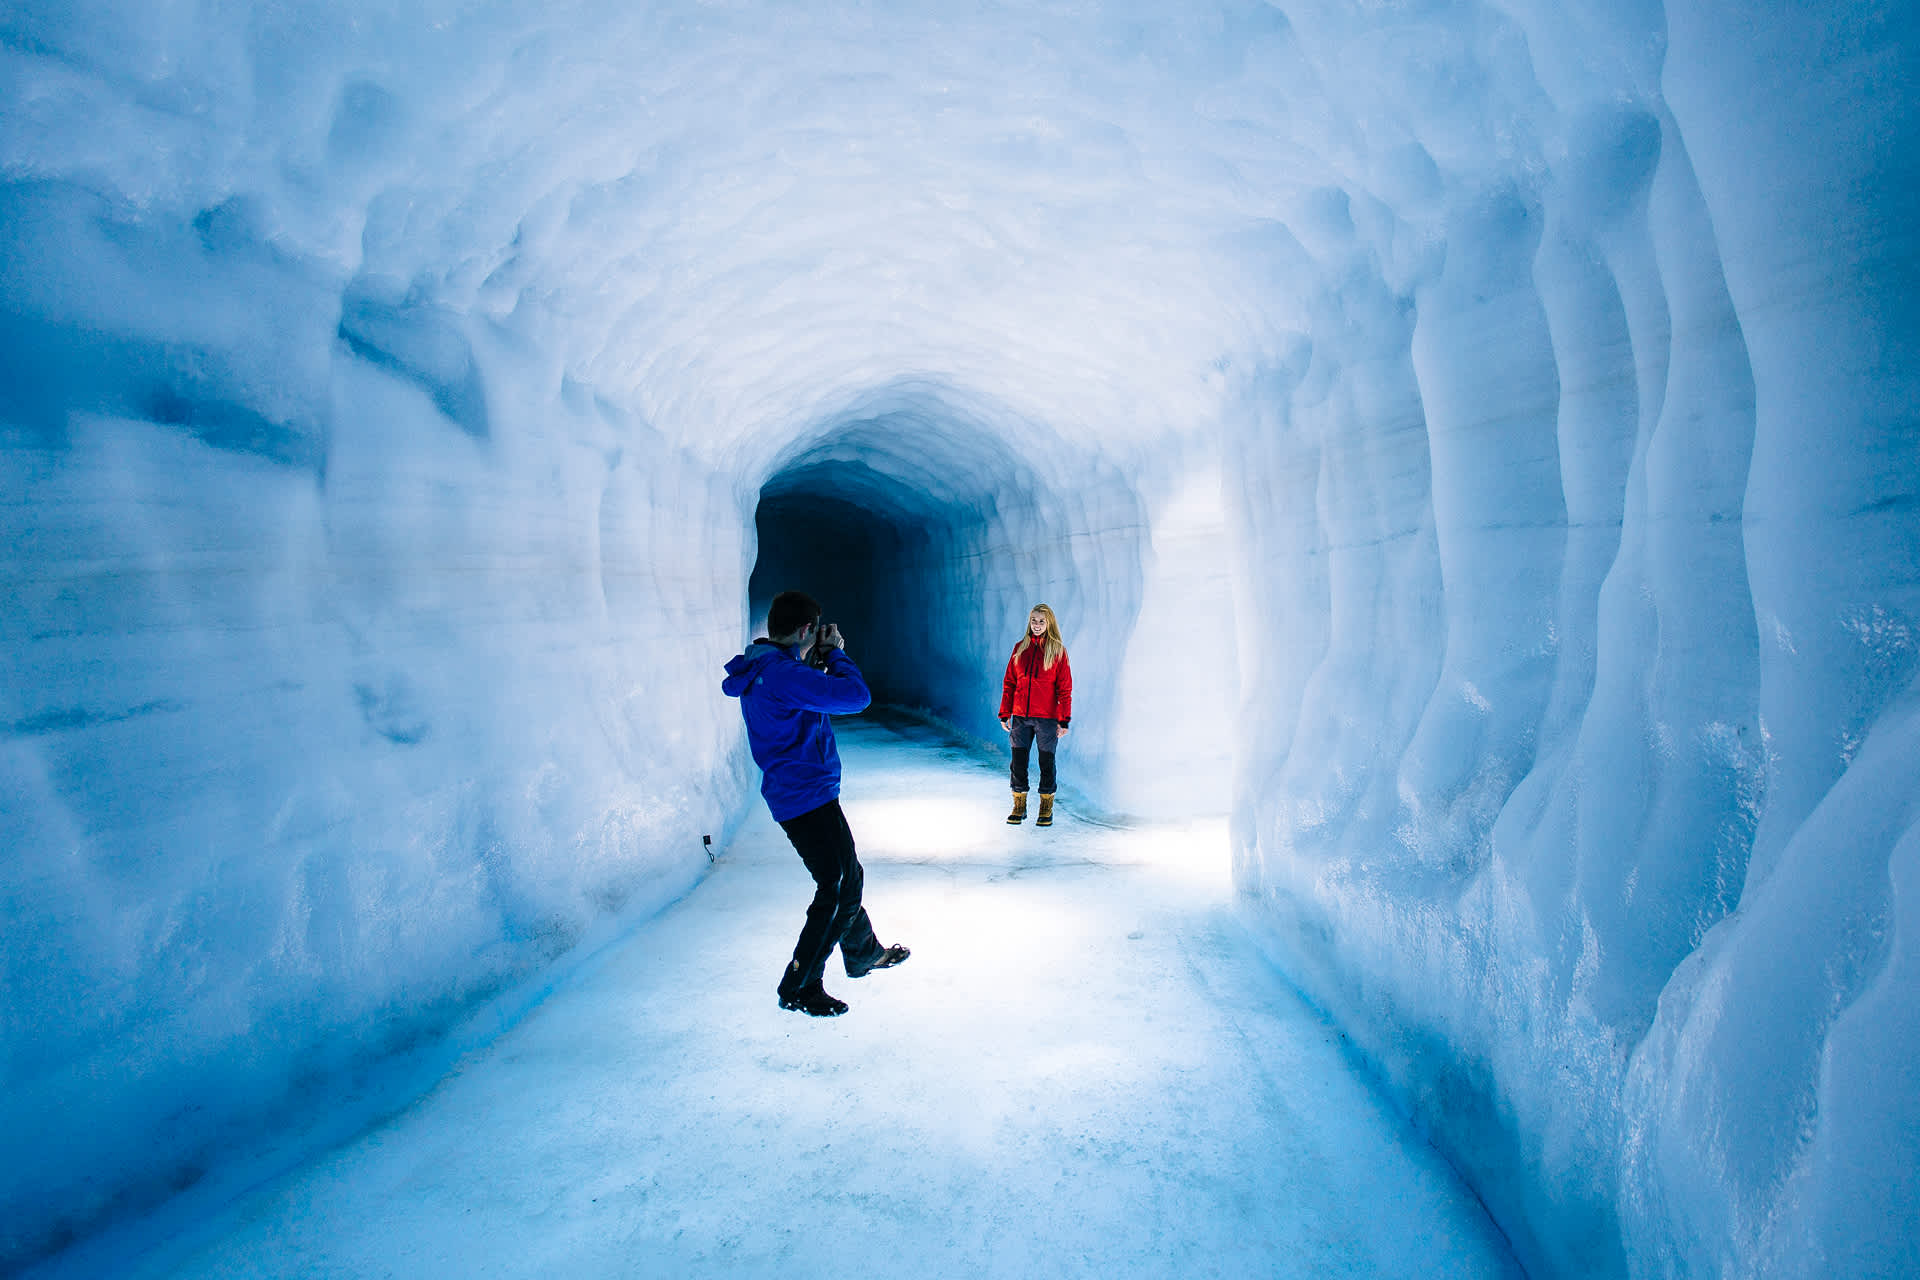 iceland ice cave tour price